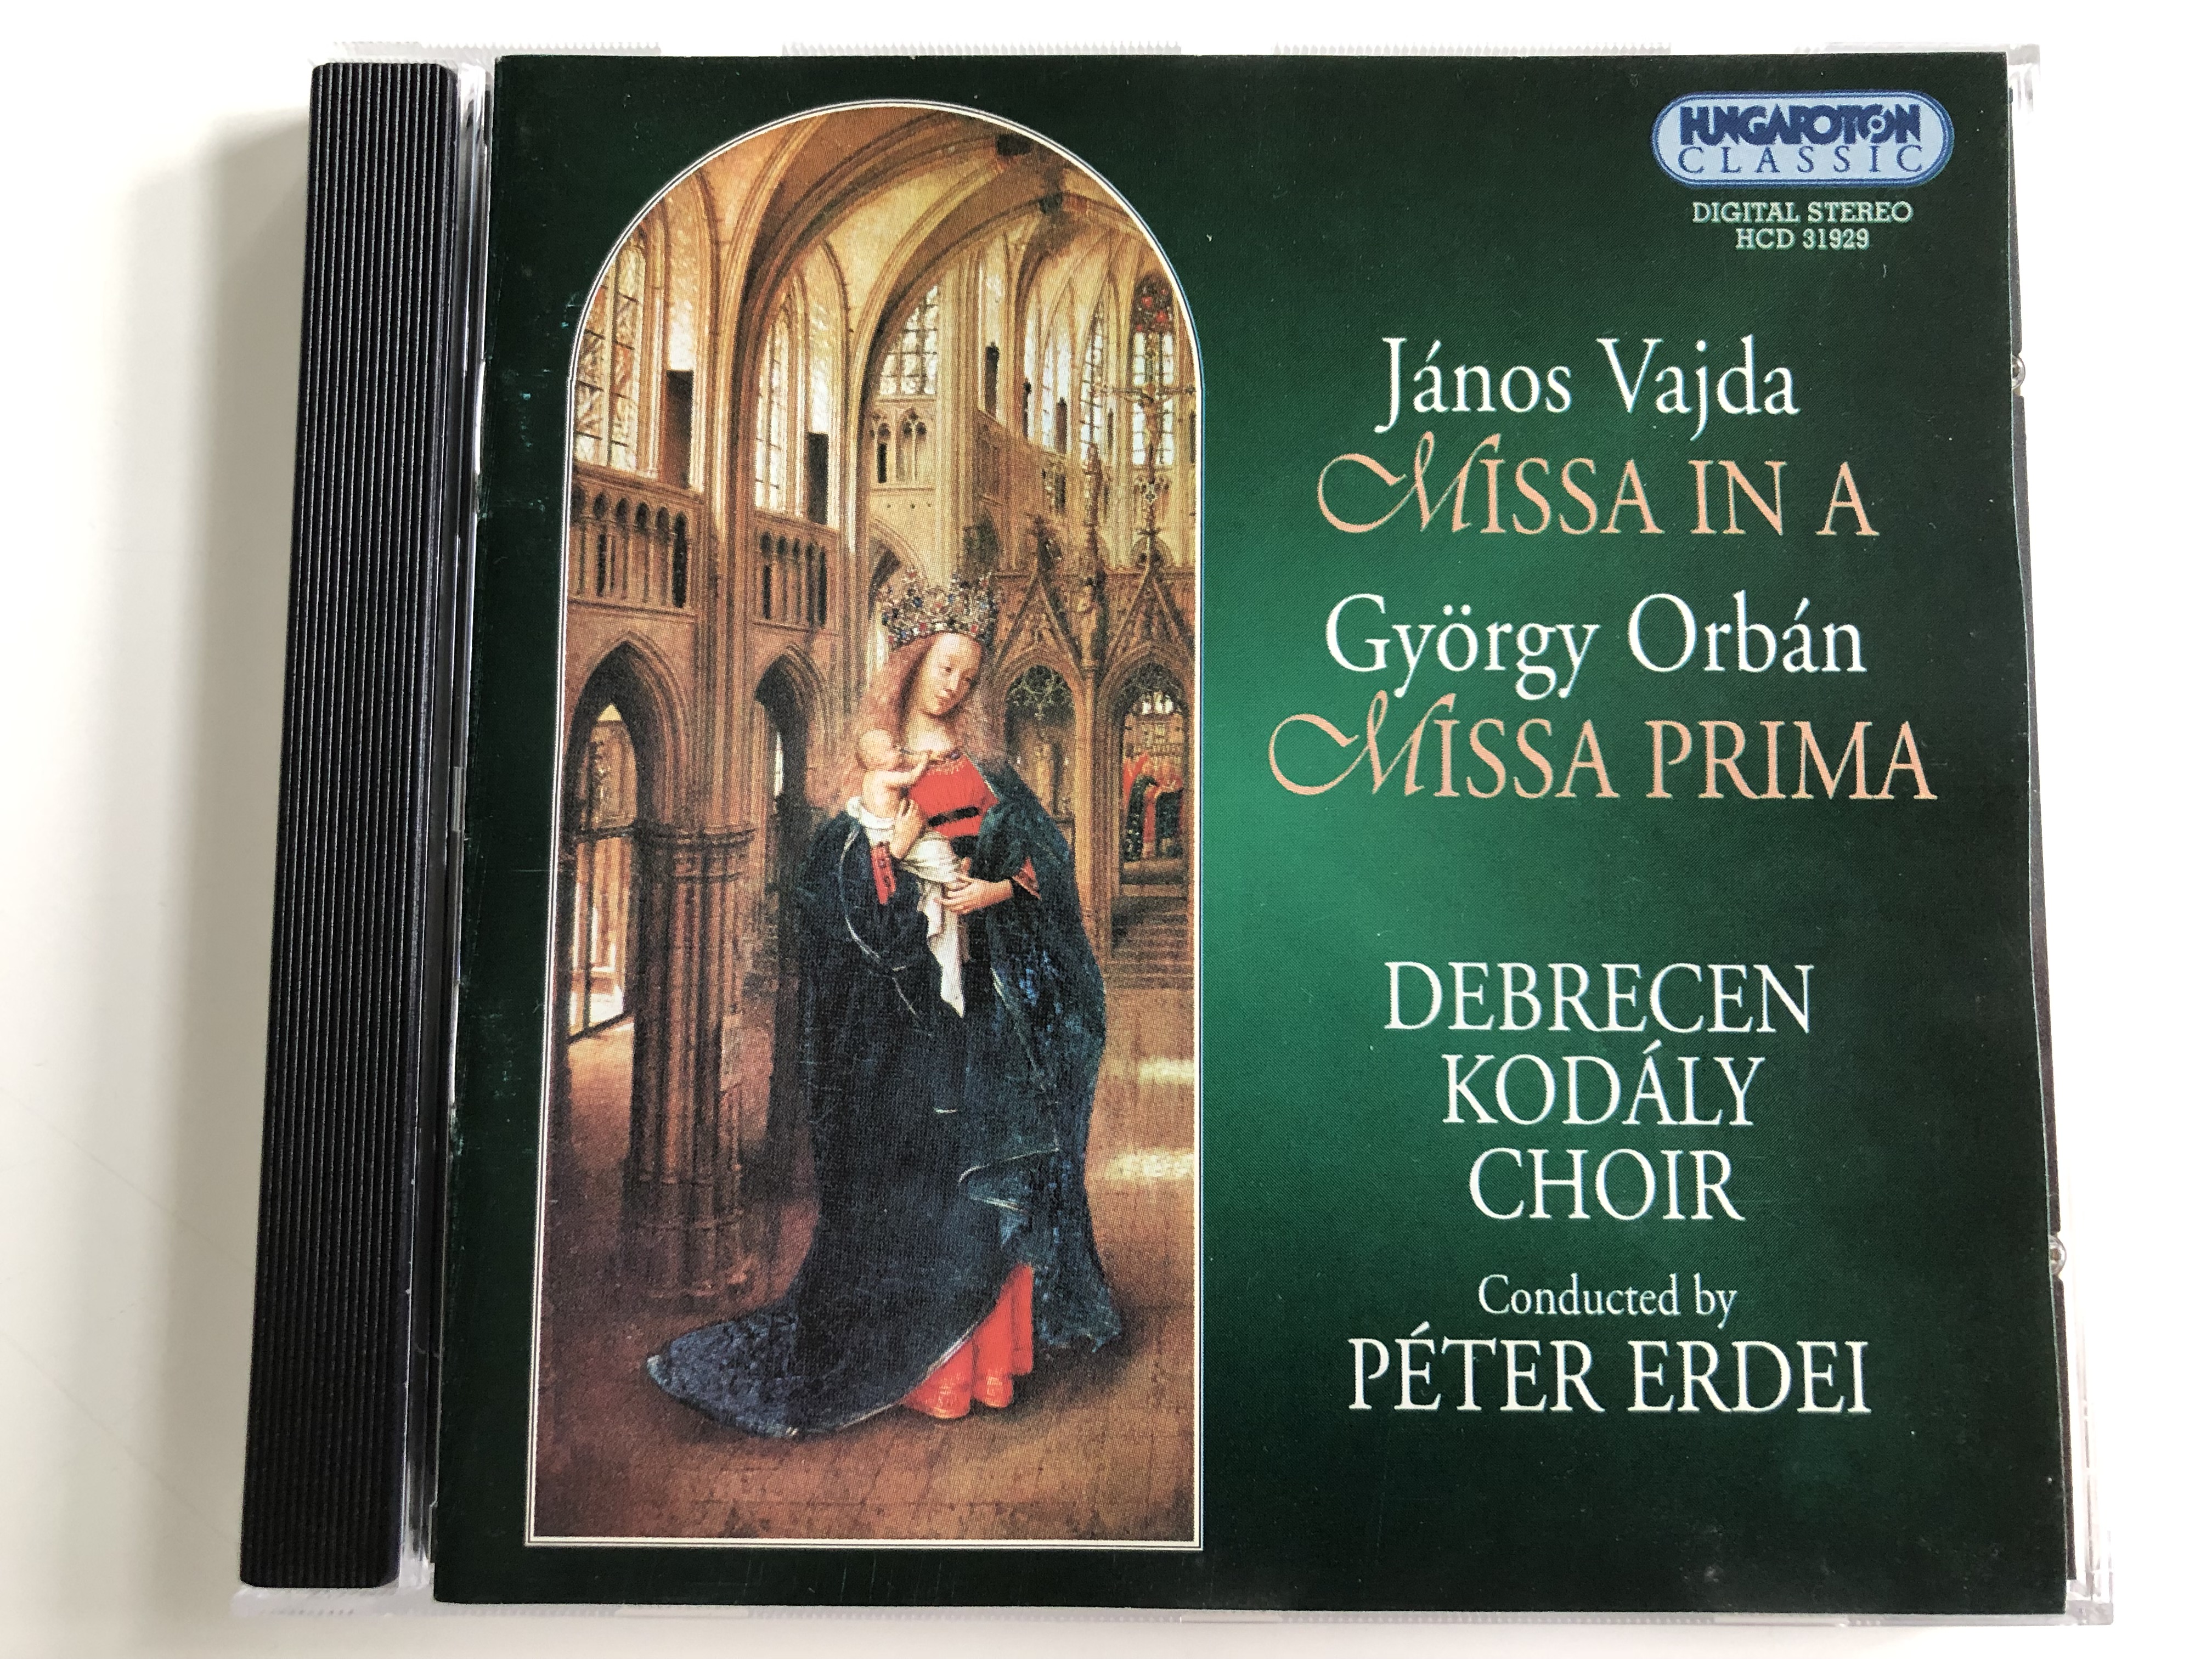 janos-vajda-missa-in-a-gyorgy-orban-missa-prima-debrecen-kodaly-choir-conducted-peter-erdei-hungaroton-audio-cd-2000-stereo-hcd-31929-1-.jpg